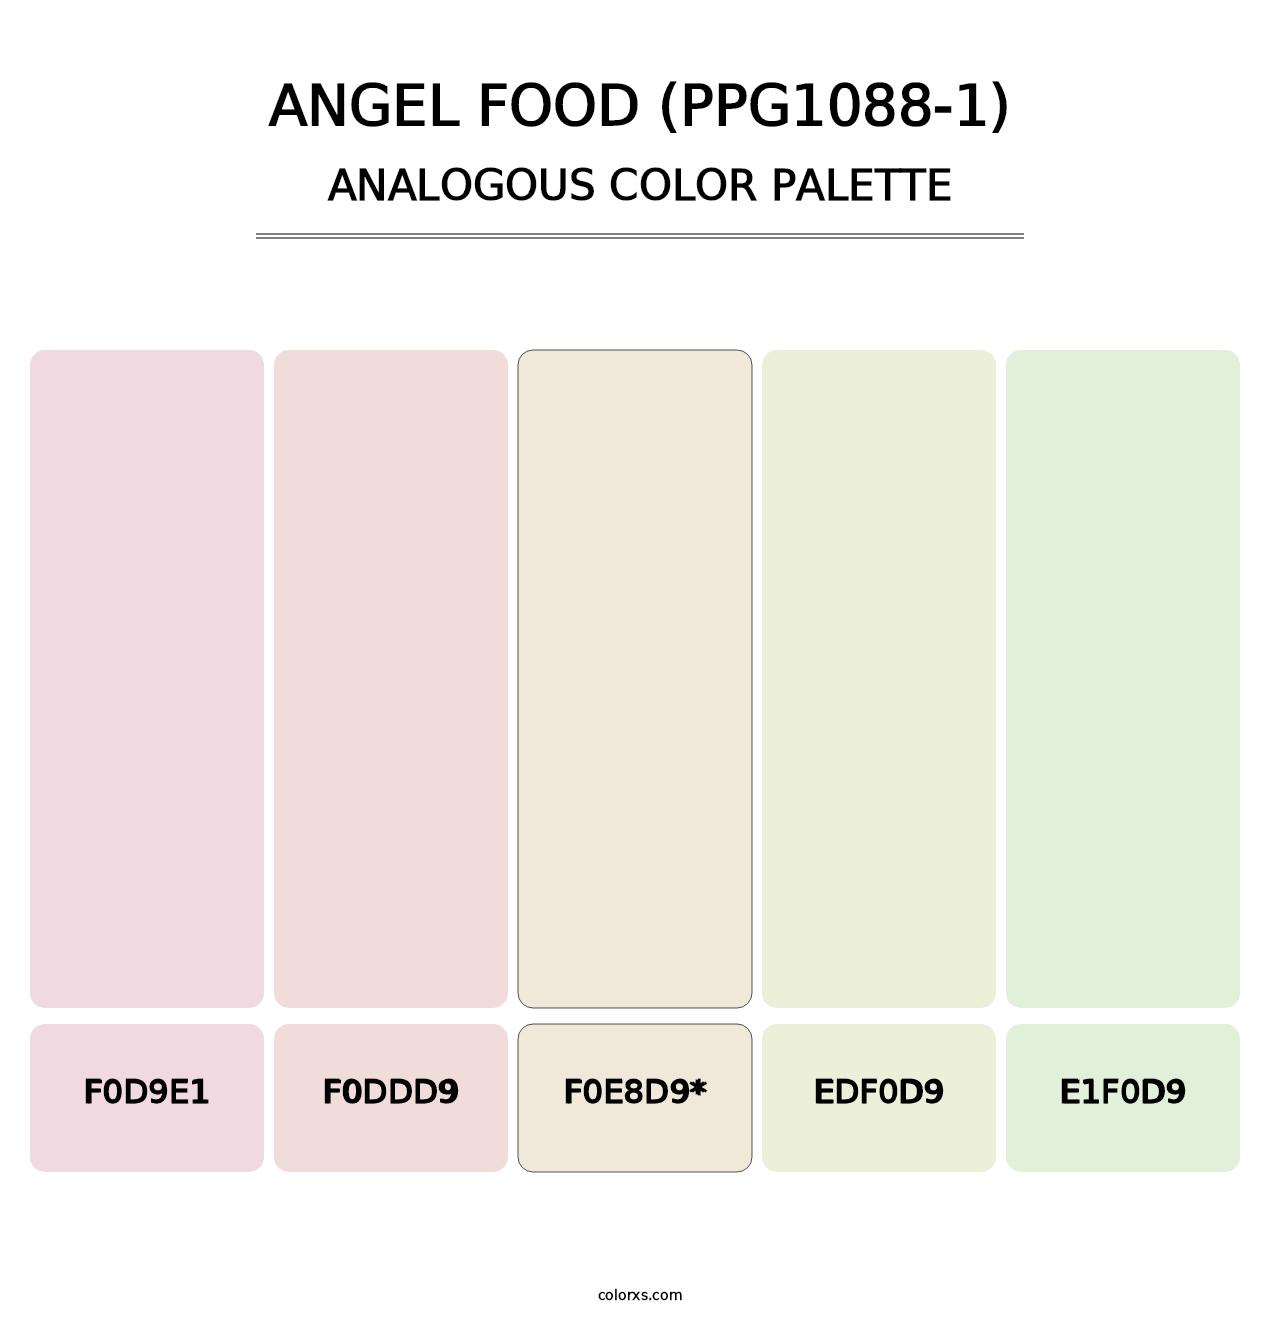 Angel Food (PPG1088-1) - Analogous Color Palette